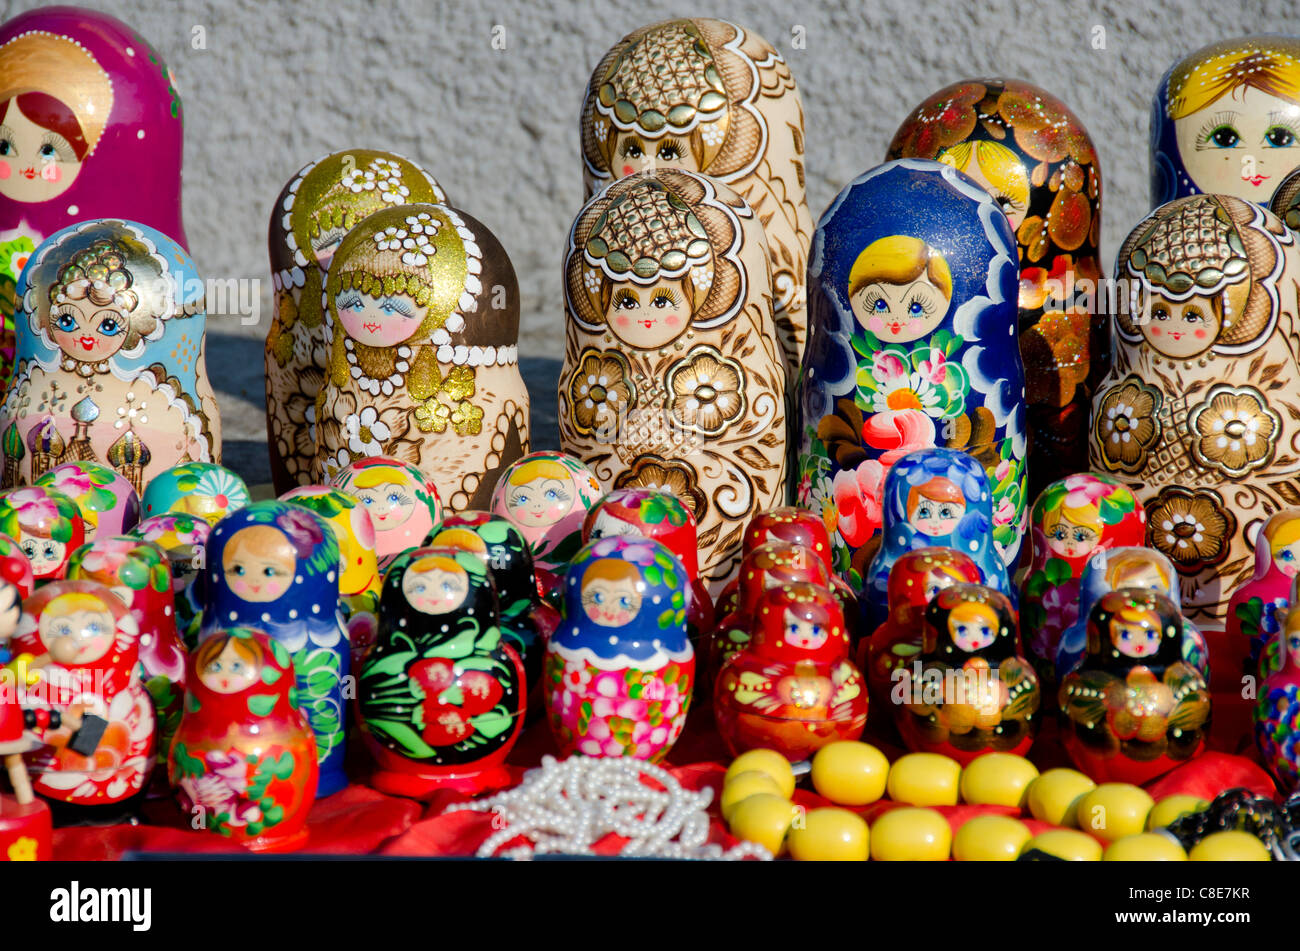 Ucrania, Odessa. Típico estilo ruso / ucraniano pintados a mano muñecas anidadas. Foto de stock